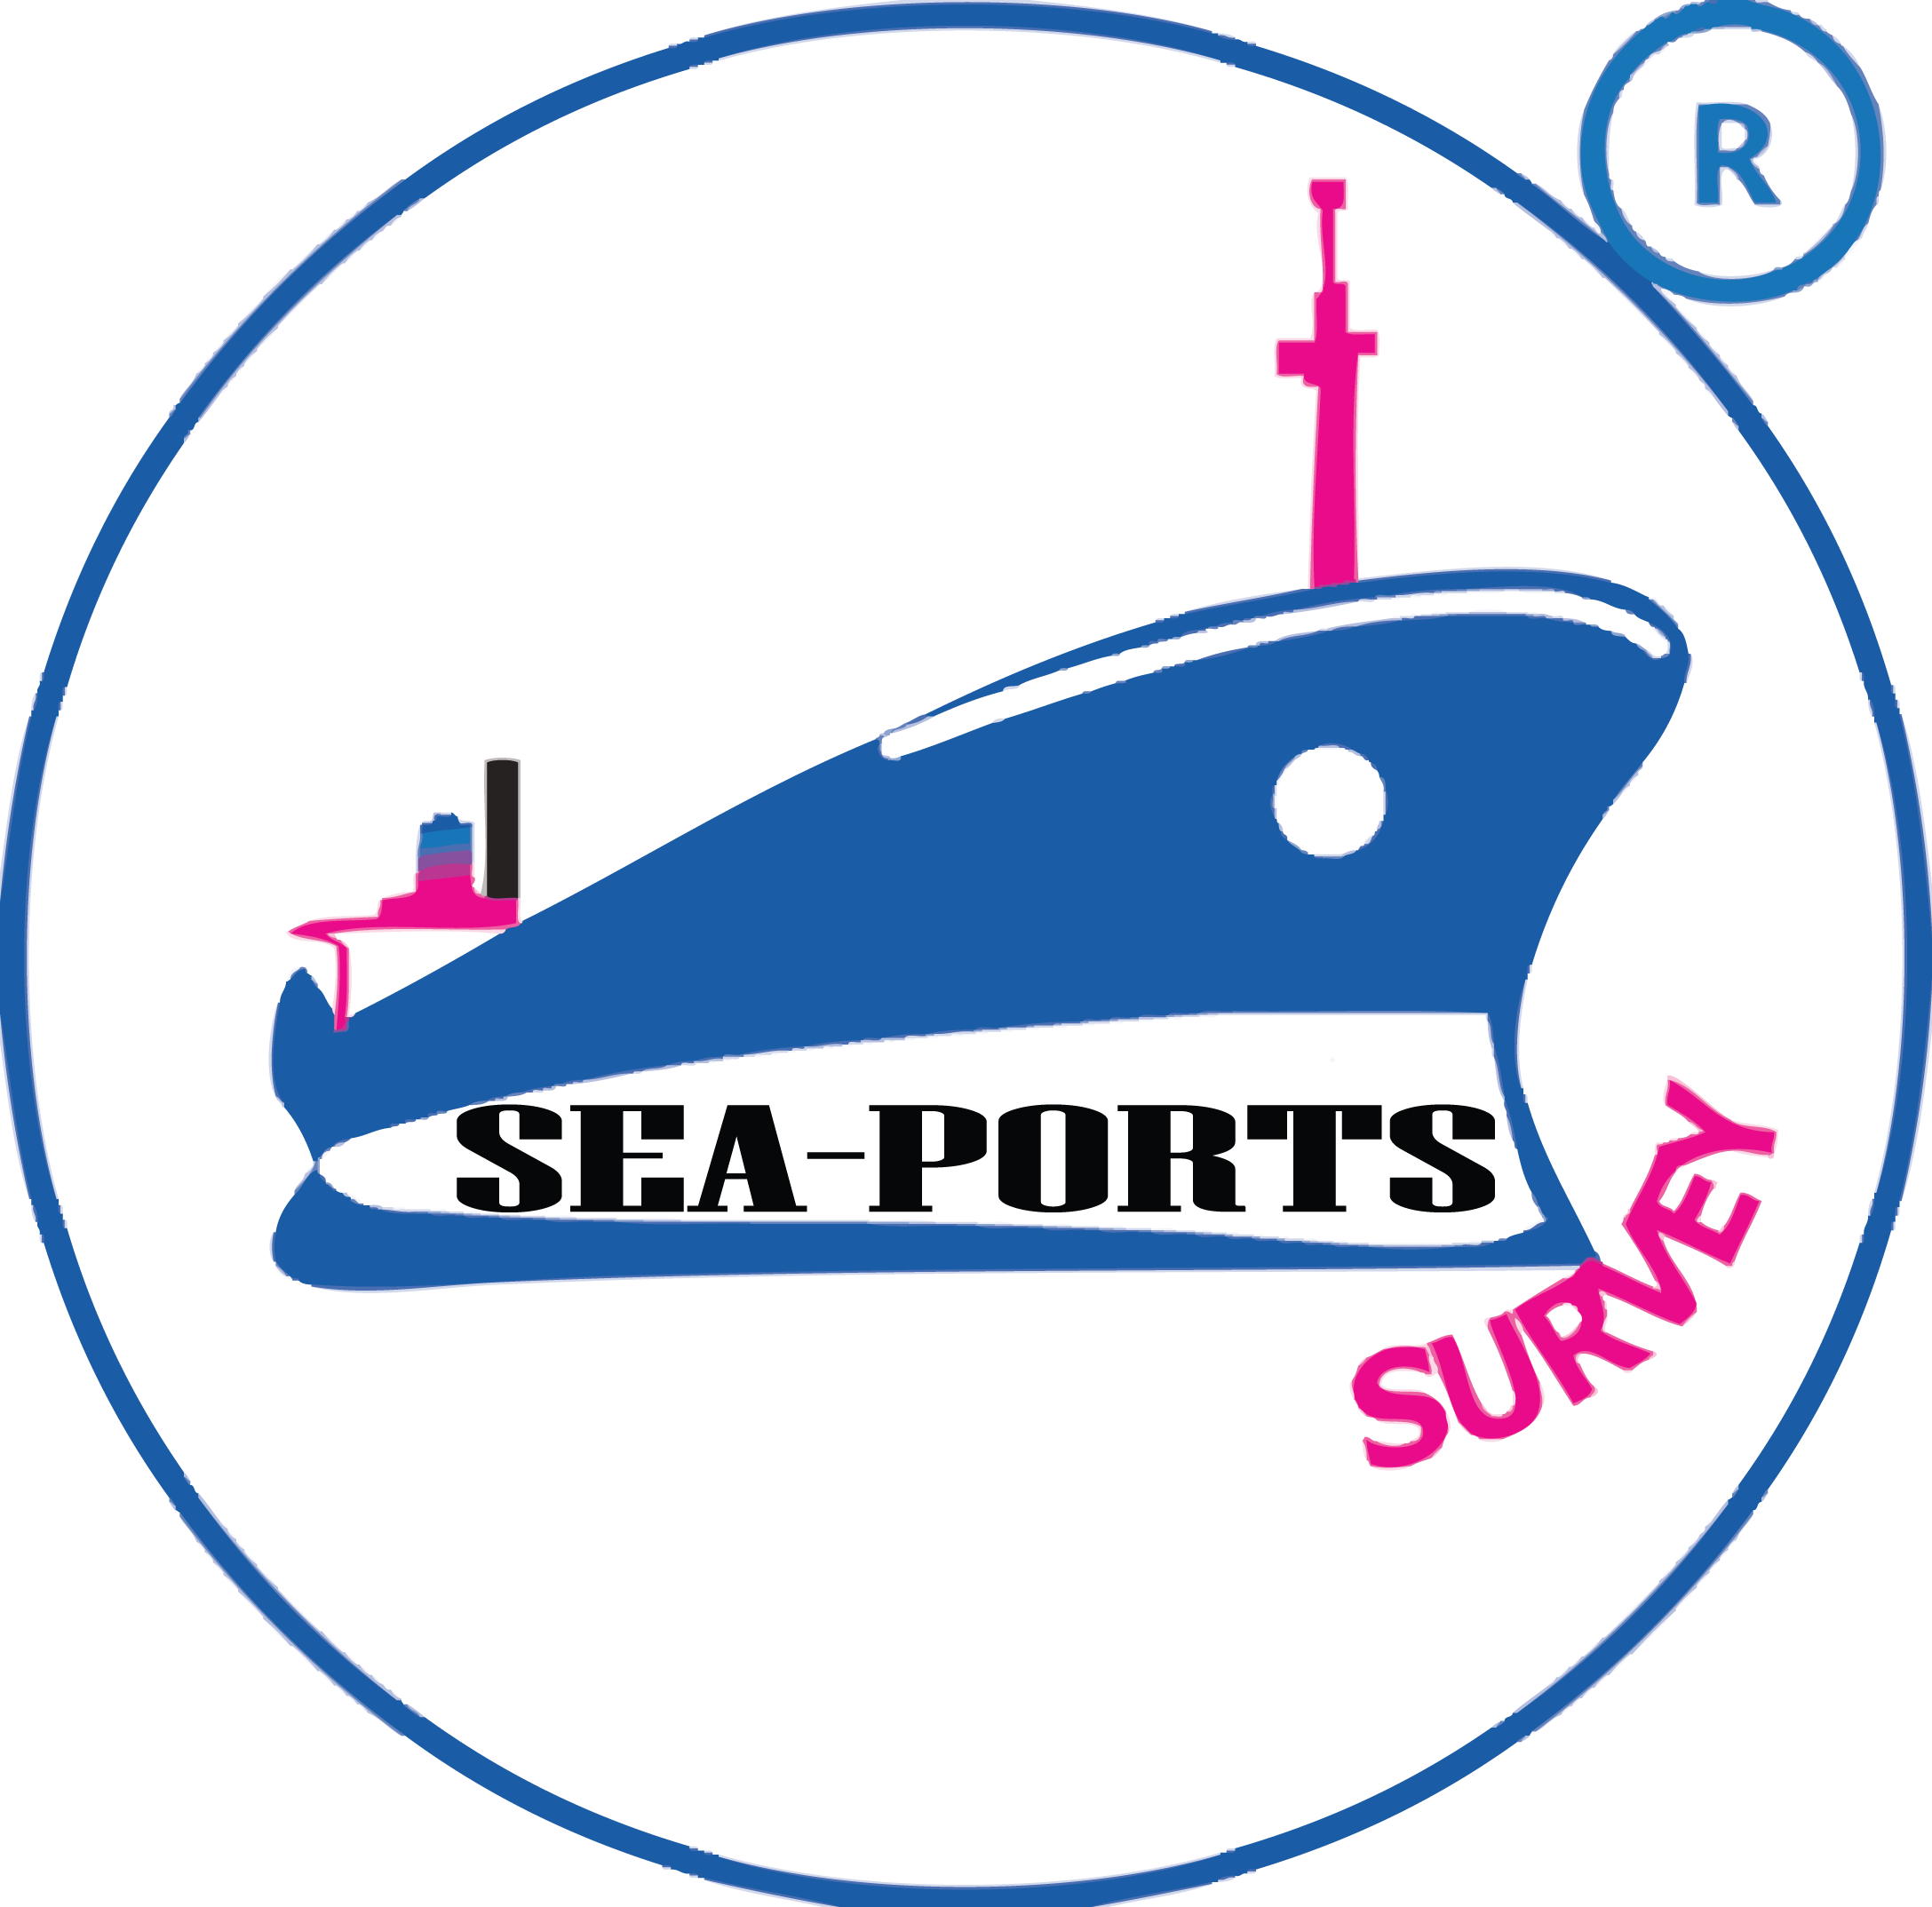 Seaports Survey